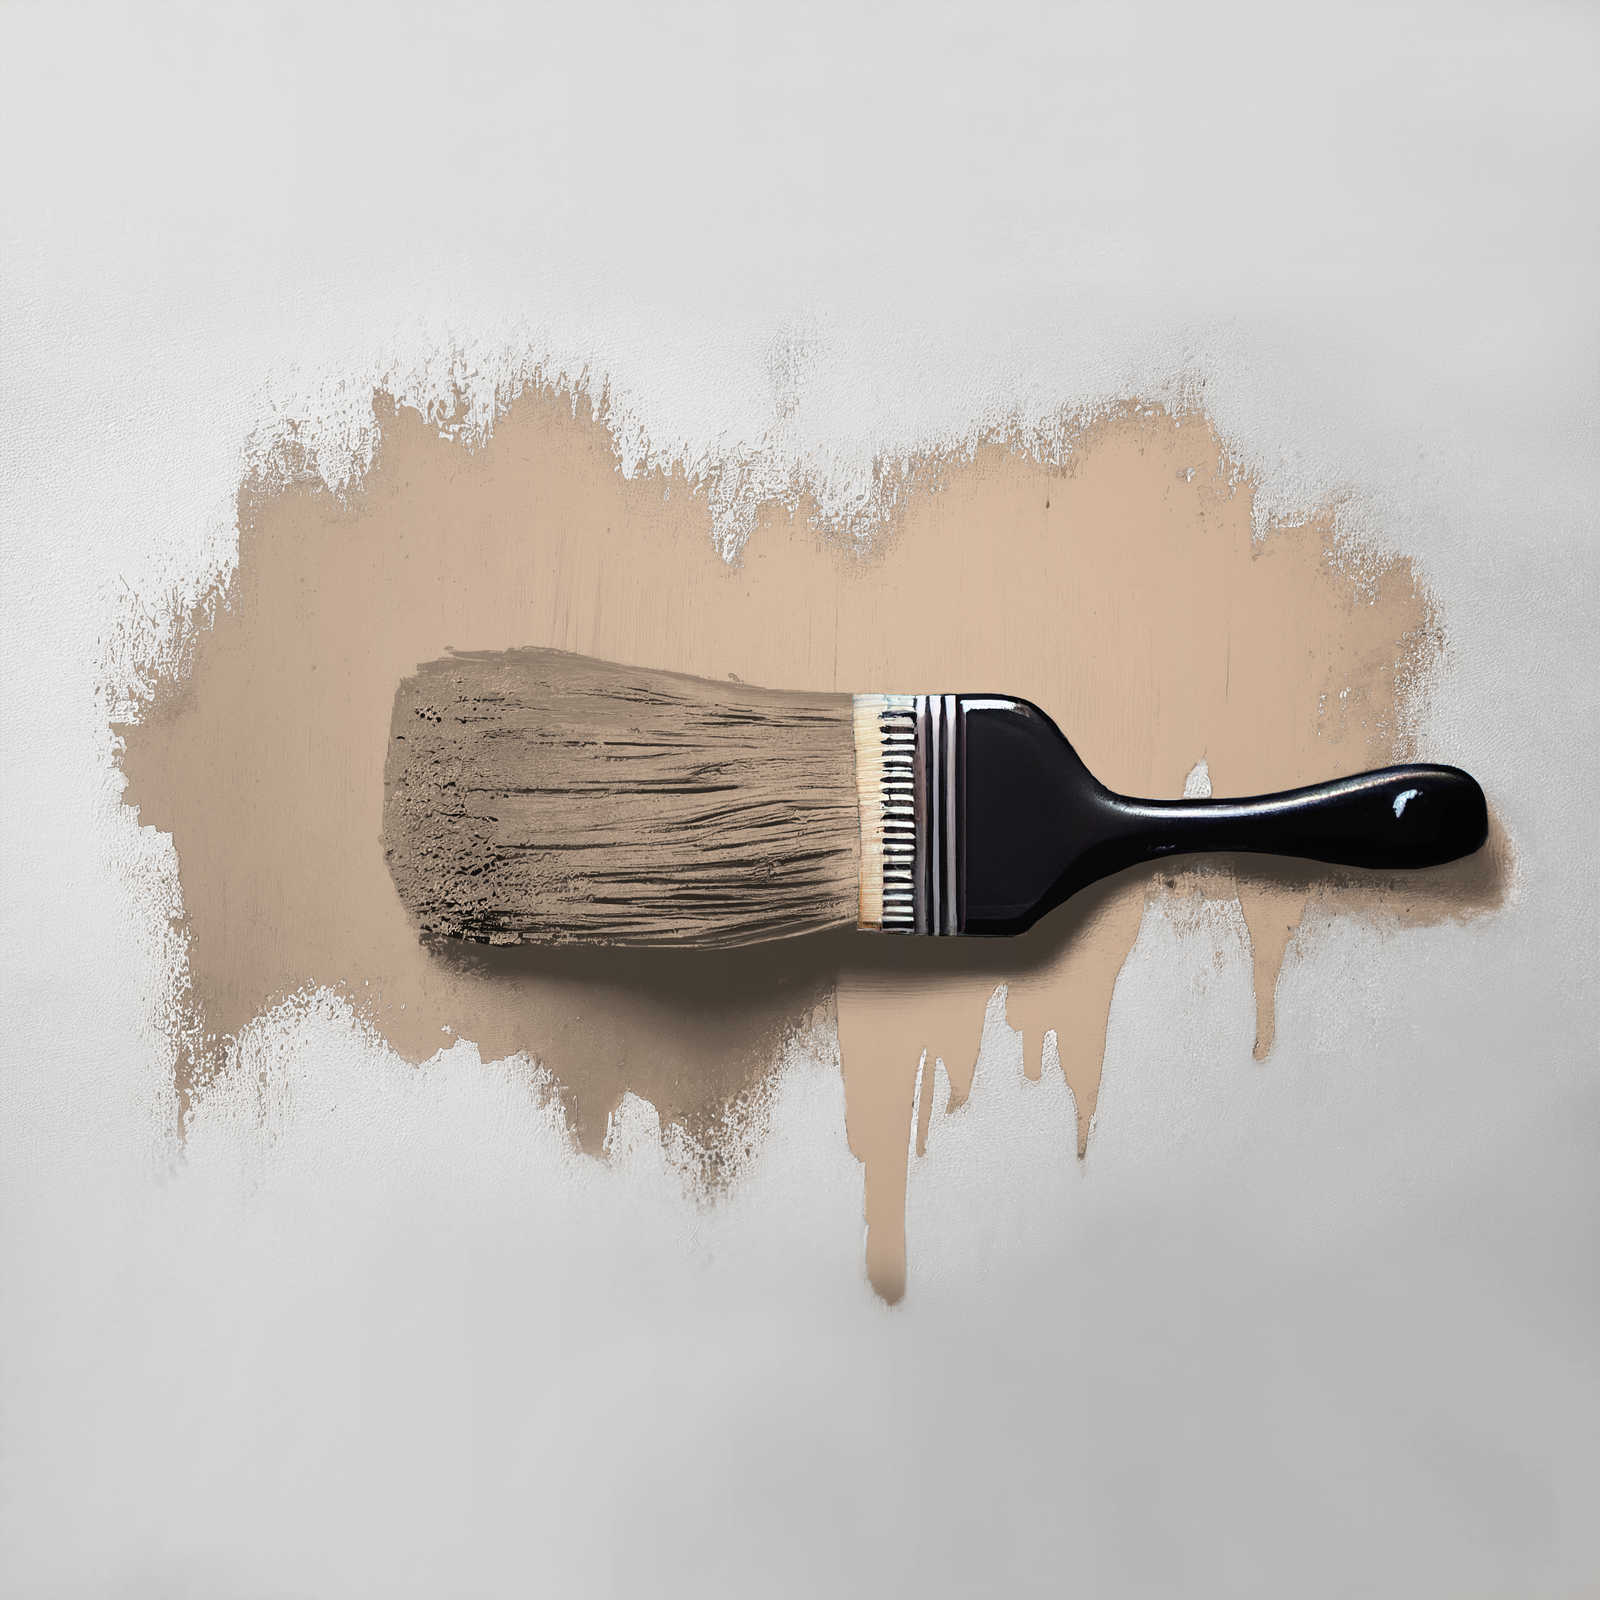             Peinture murale TCK6010 »Latte Macchhiato« en beige naturel – 5,0 litres
        